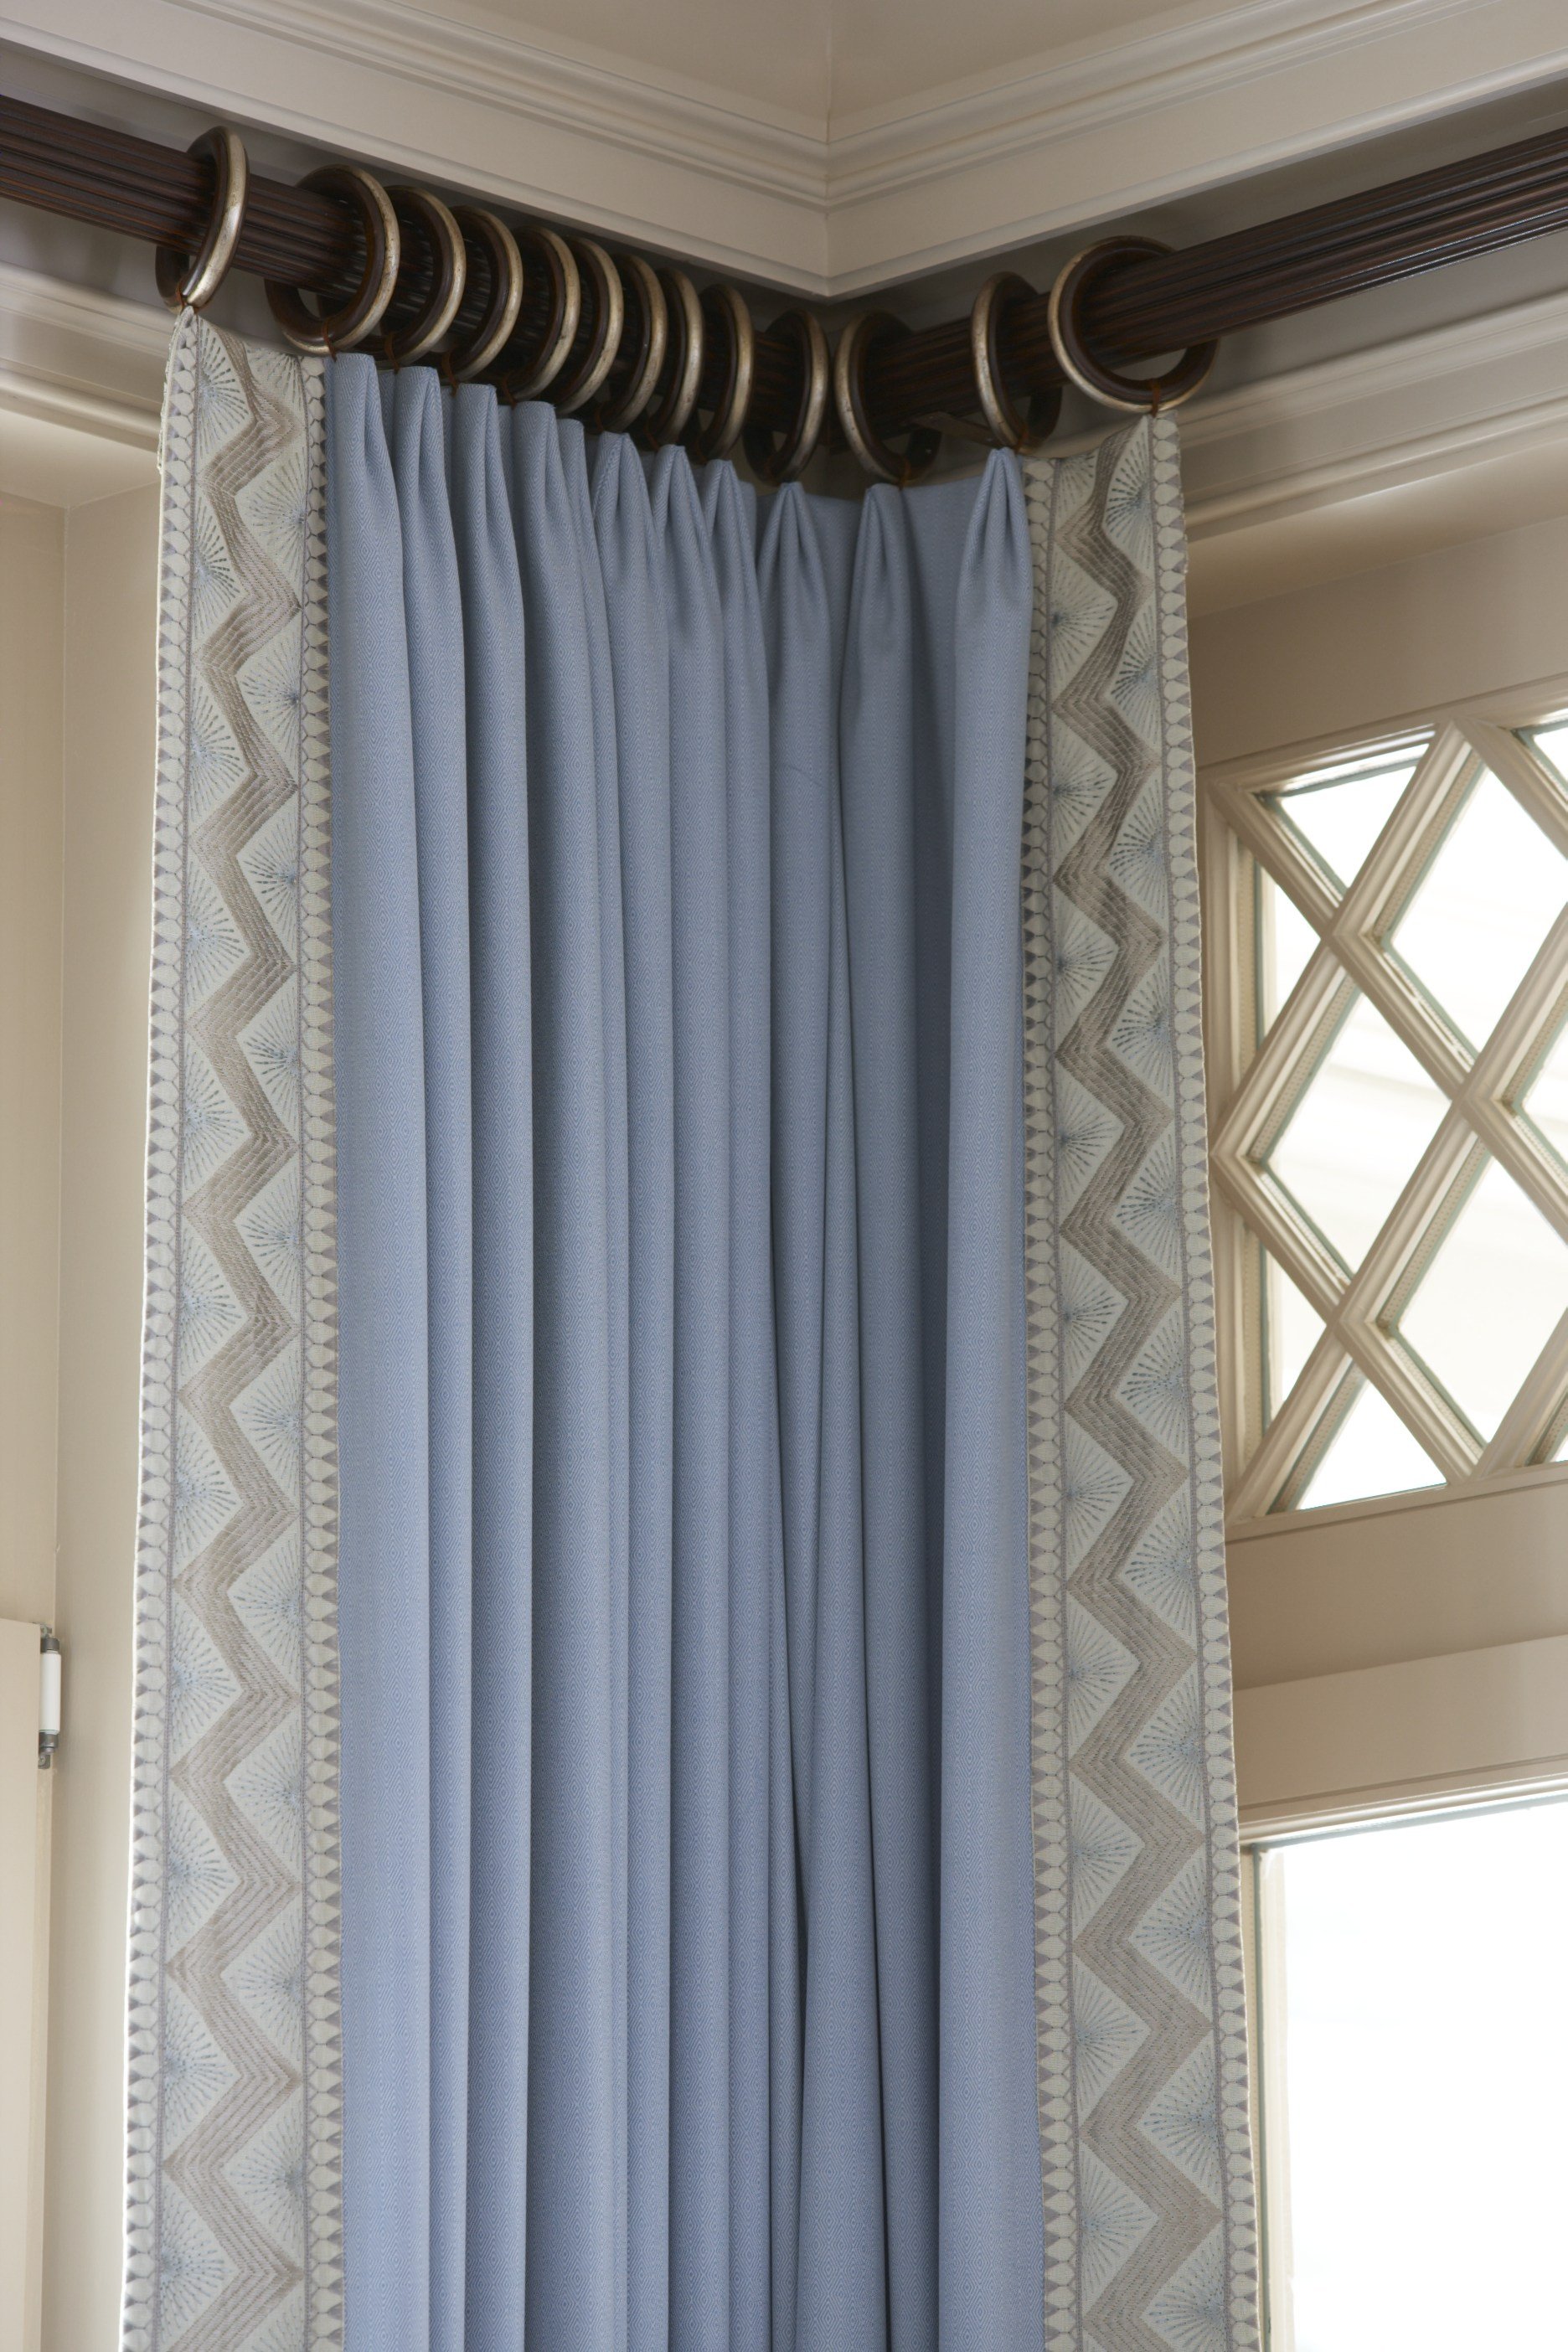 12-curtain-detailing-cream-blue-patterns-jacobean-country-house-rinfret-interior-designs.jpg